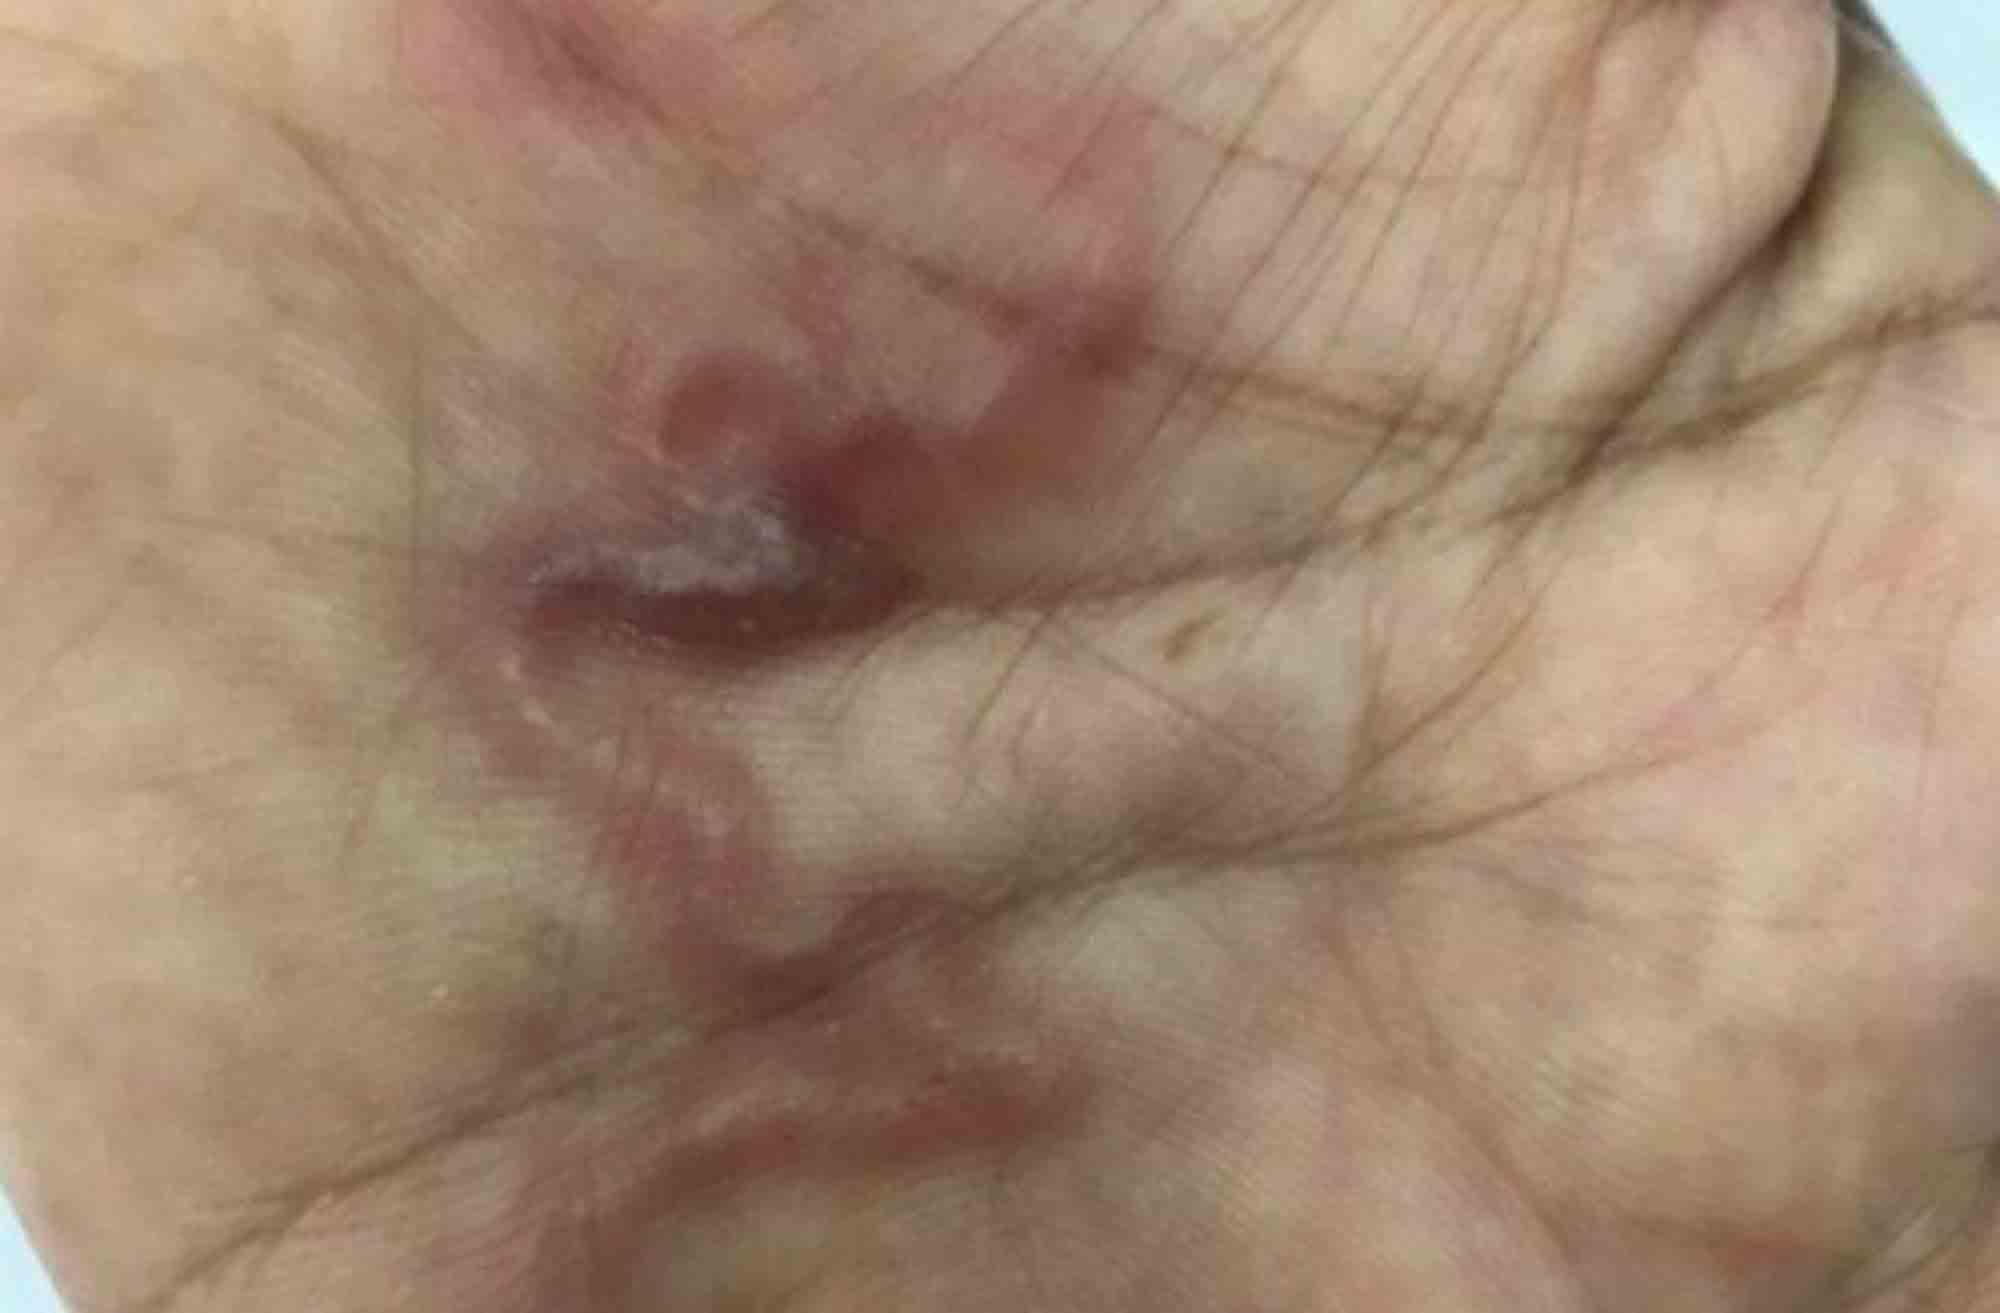 Parasites swarming beneath skin of Vietnamese woman